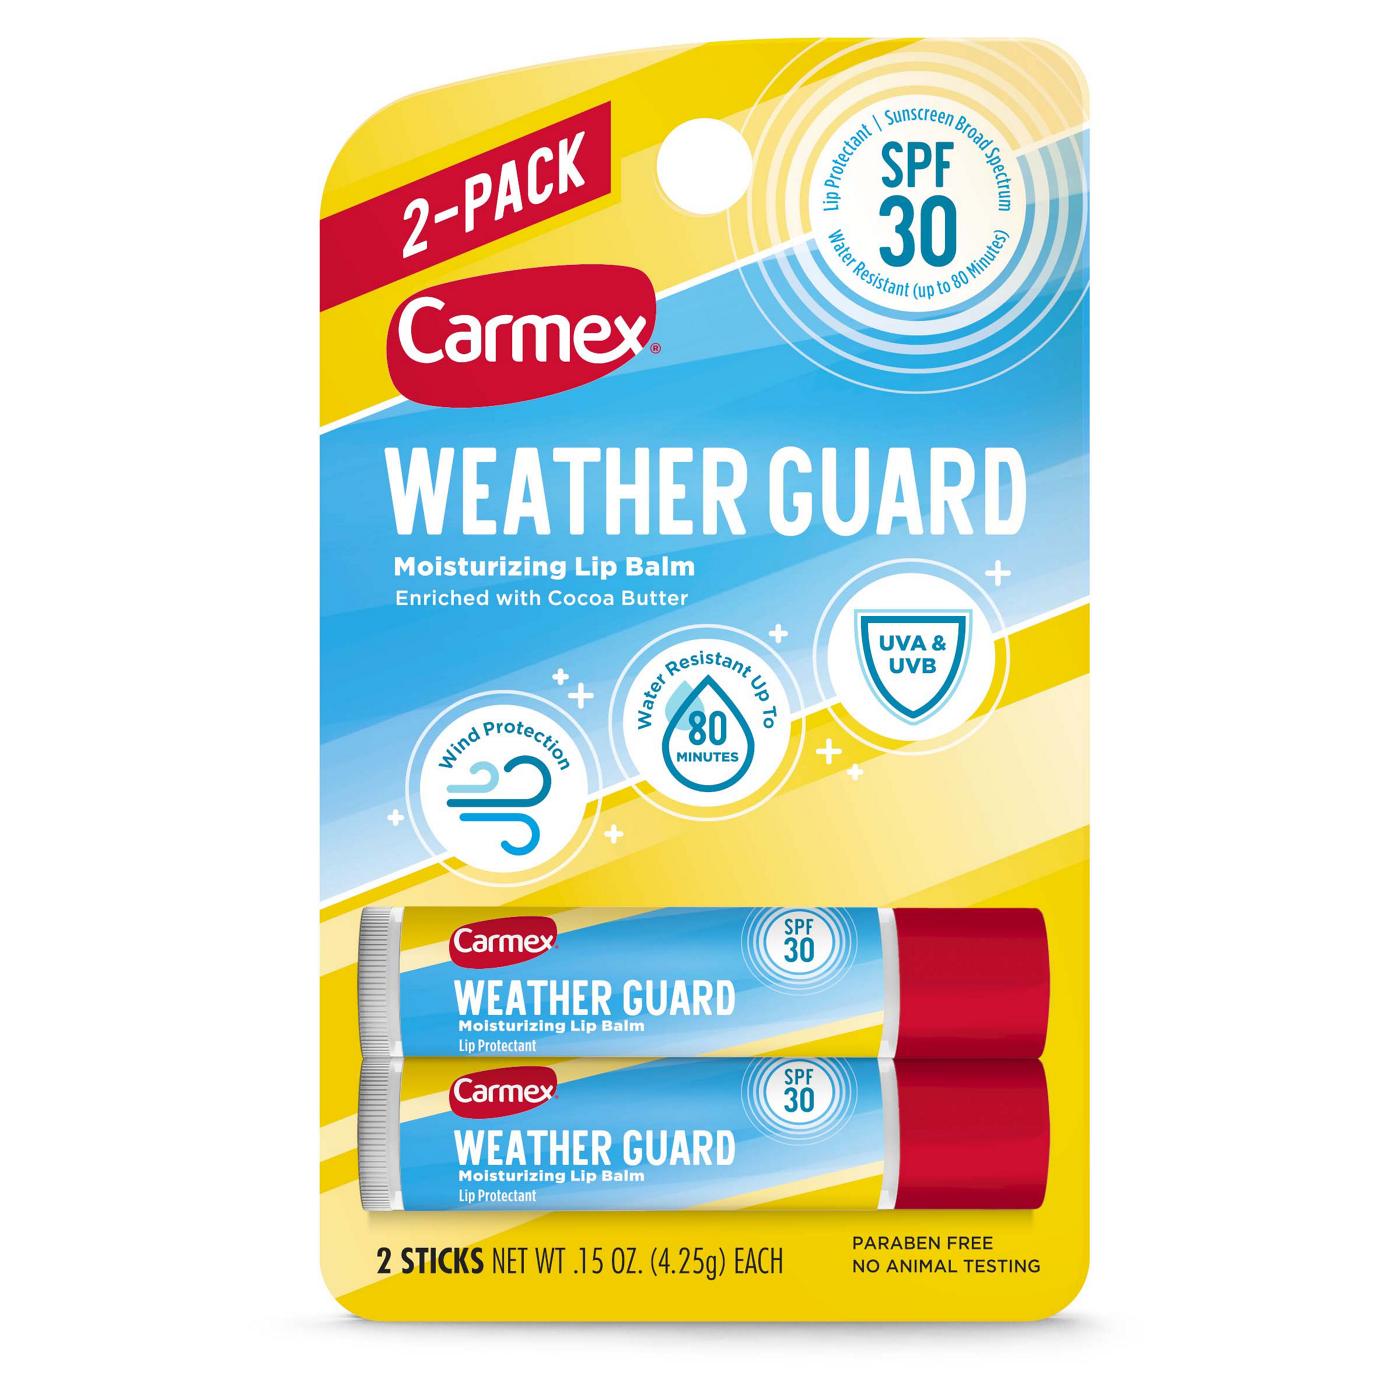 Carmex Weather Guard Moisturizing Lip Balm; image 1 of 2